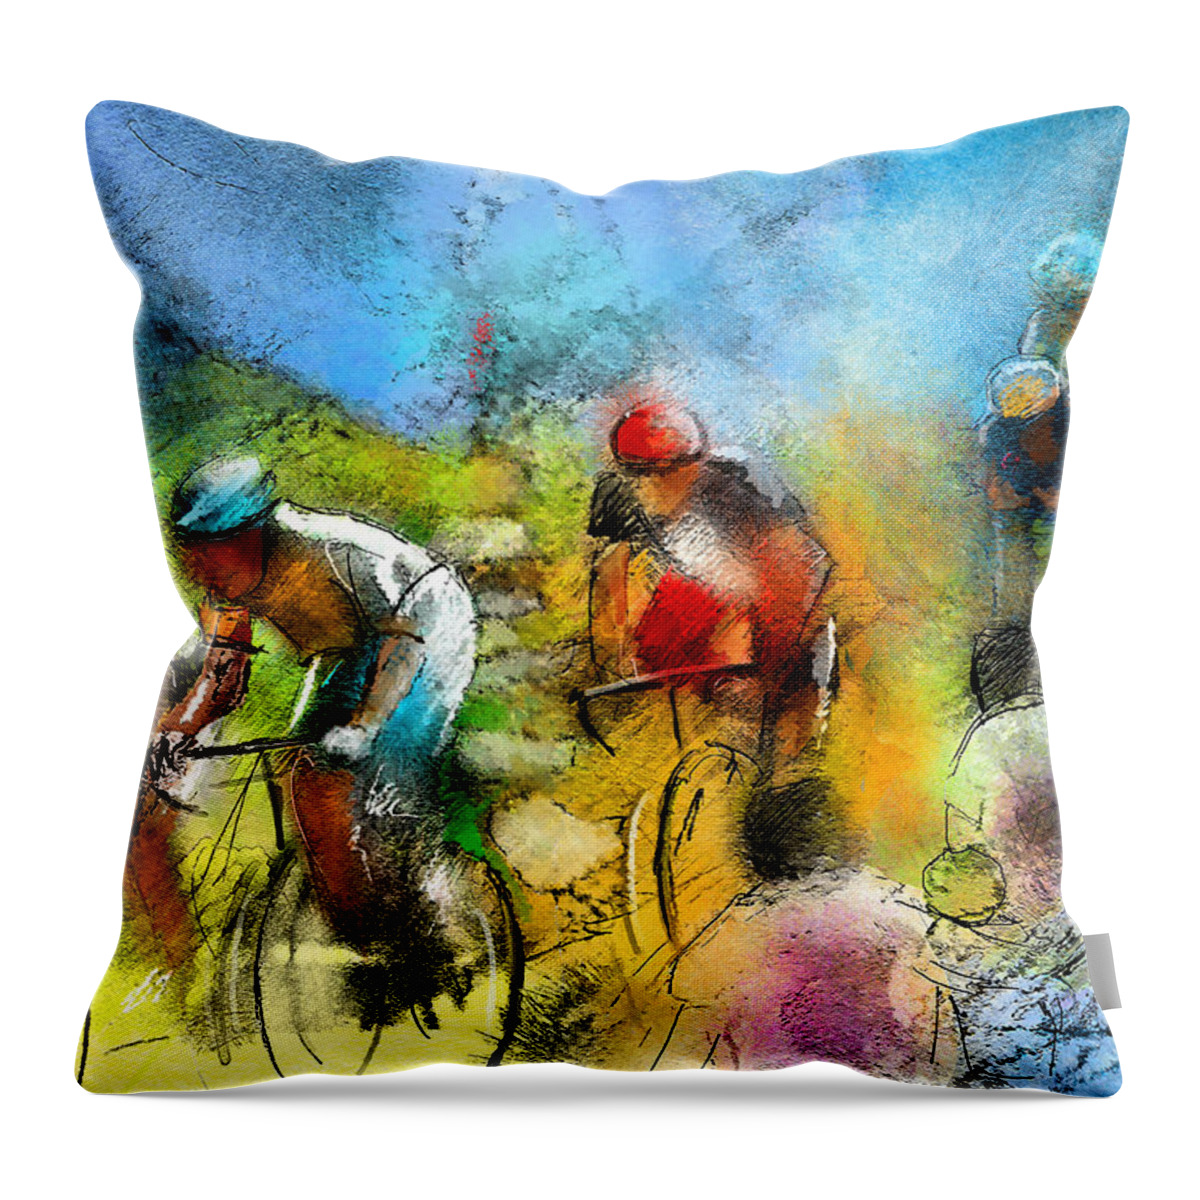 Sports Throw Pillow featuring the painting Le Tour de France 01 bis by Miki De Goodaboom